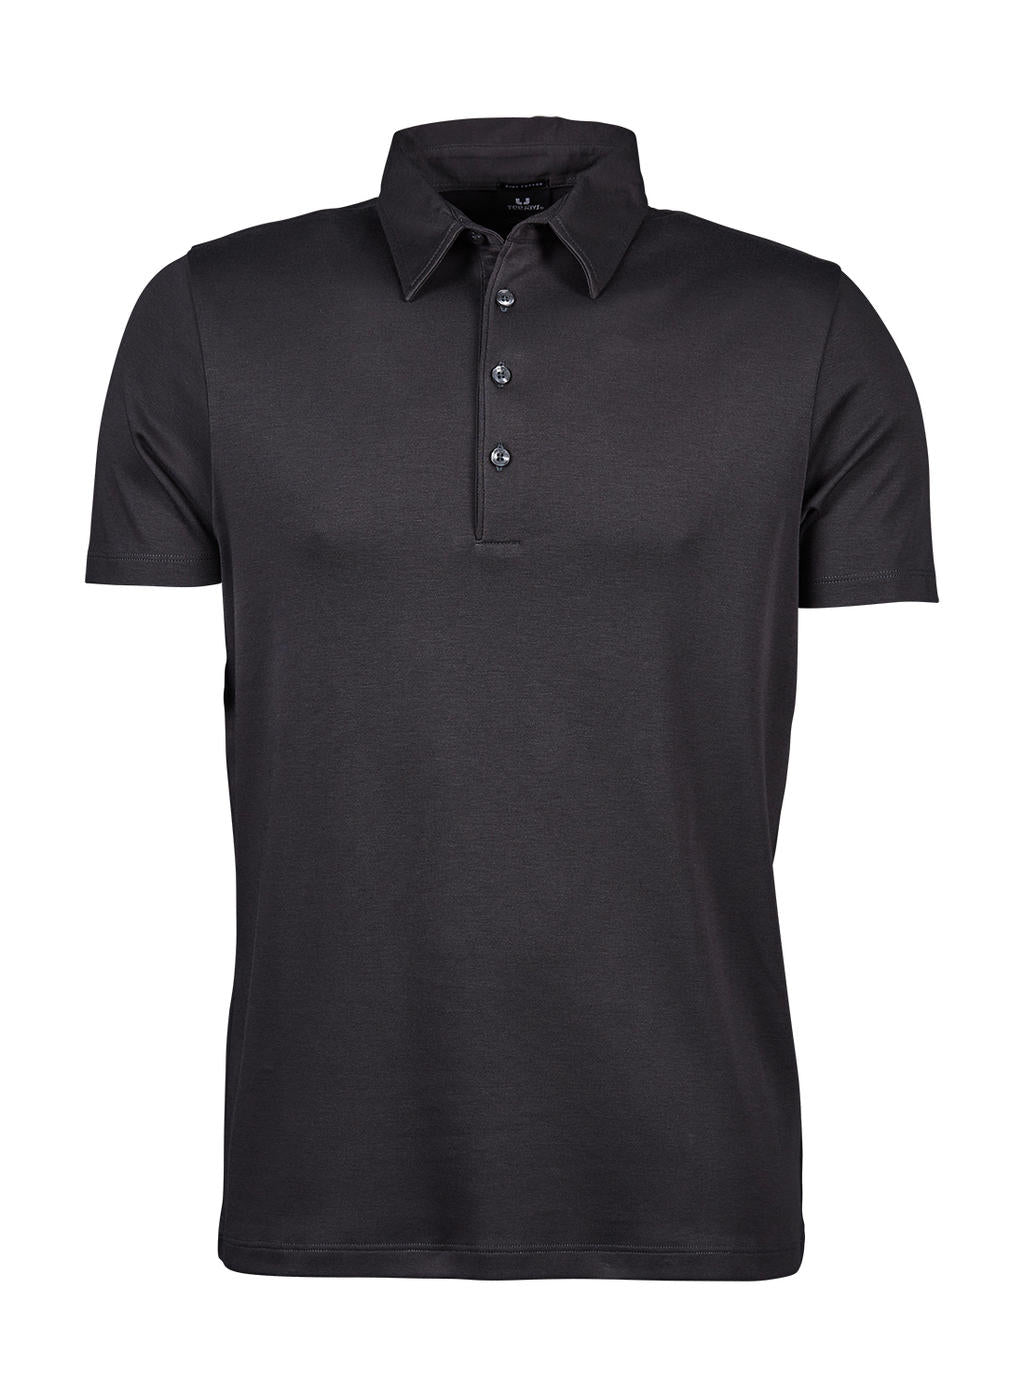 Tee Jays Herren Poloshirt Polohemd Polo Shirt T-Shirt Kurzarm Shirt